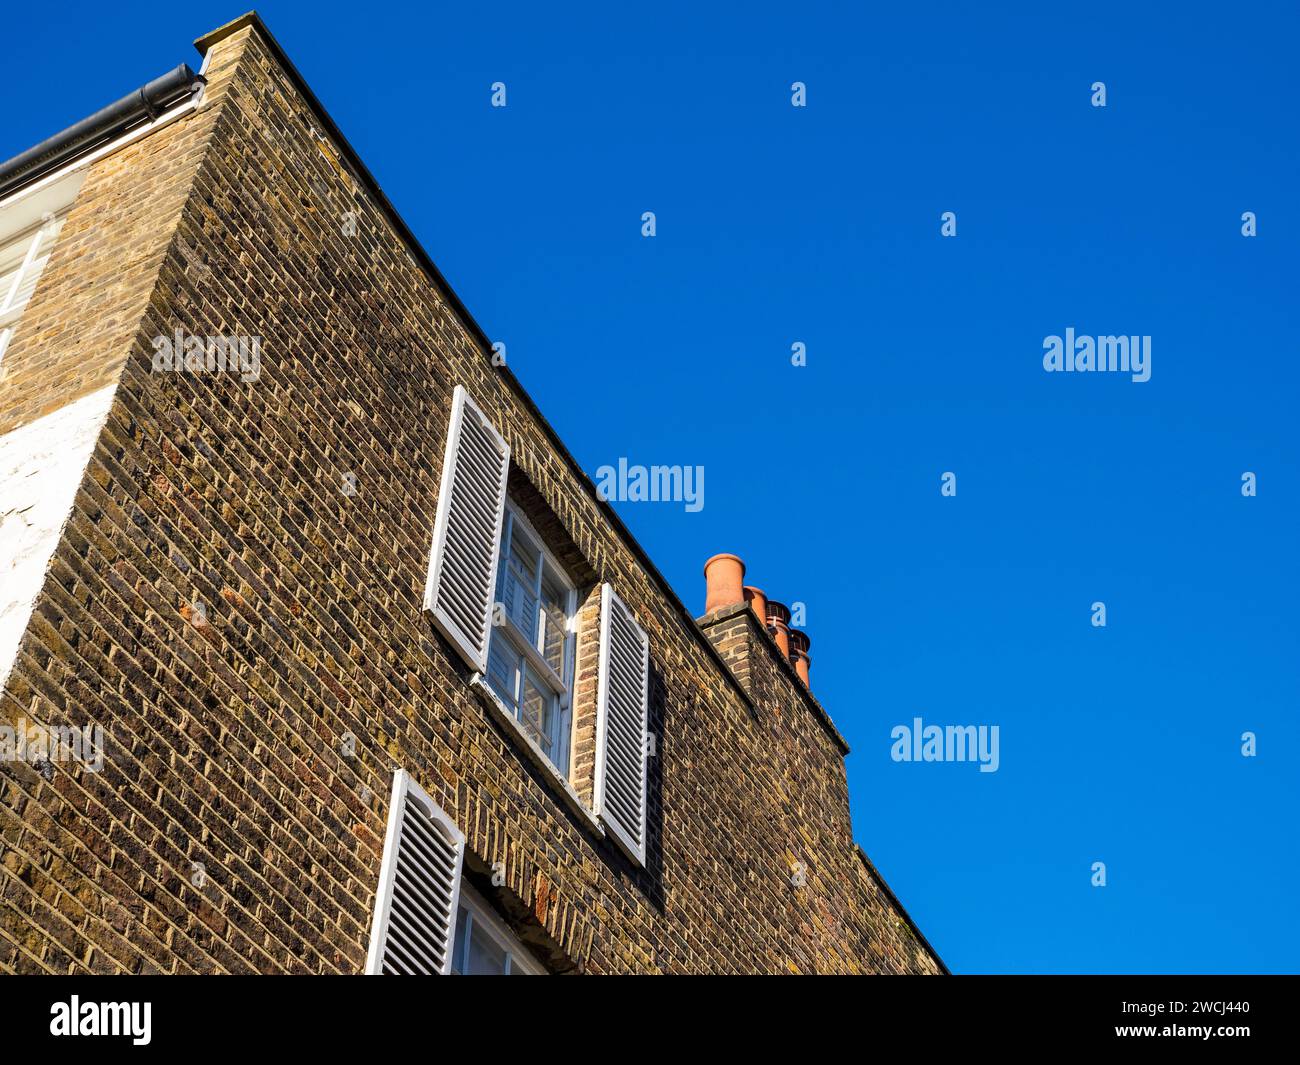 Luxury Houses with Sash Windows, The Mount, Hampstead, London, England, UK, GB. Stock Photo